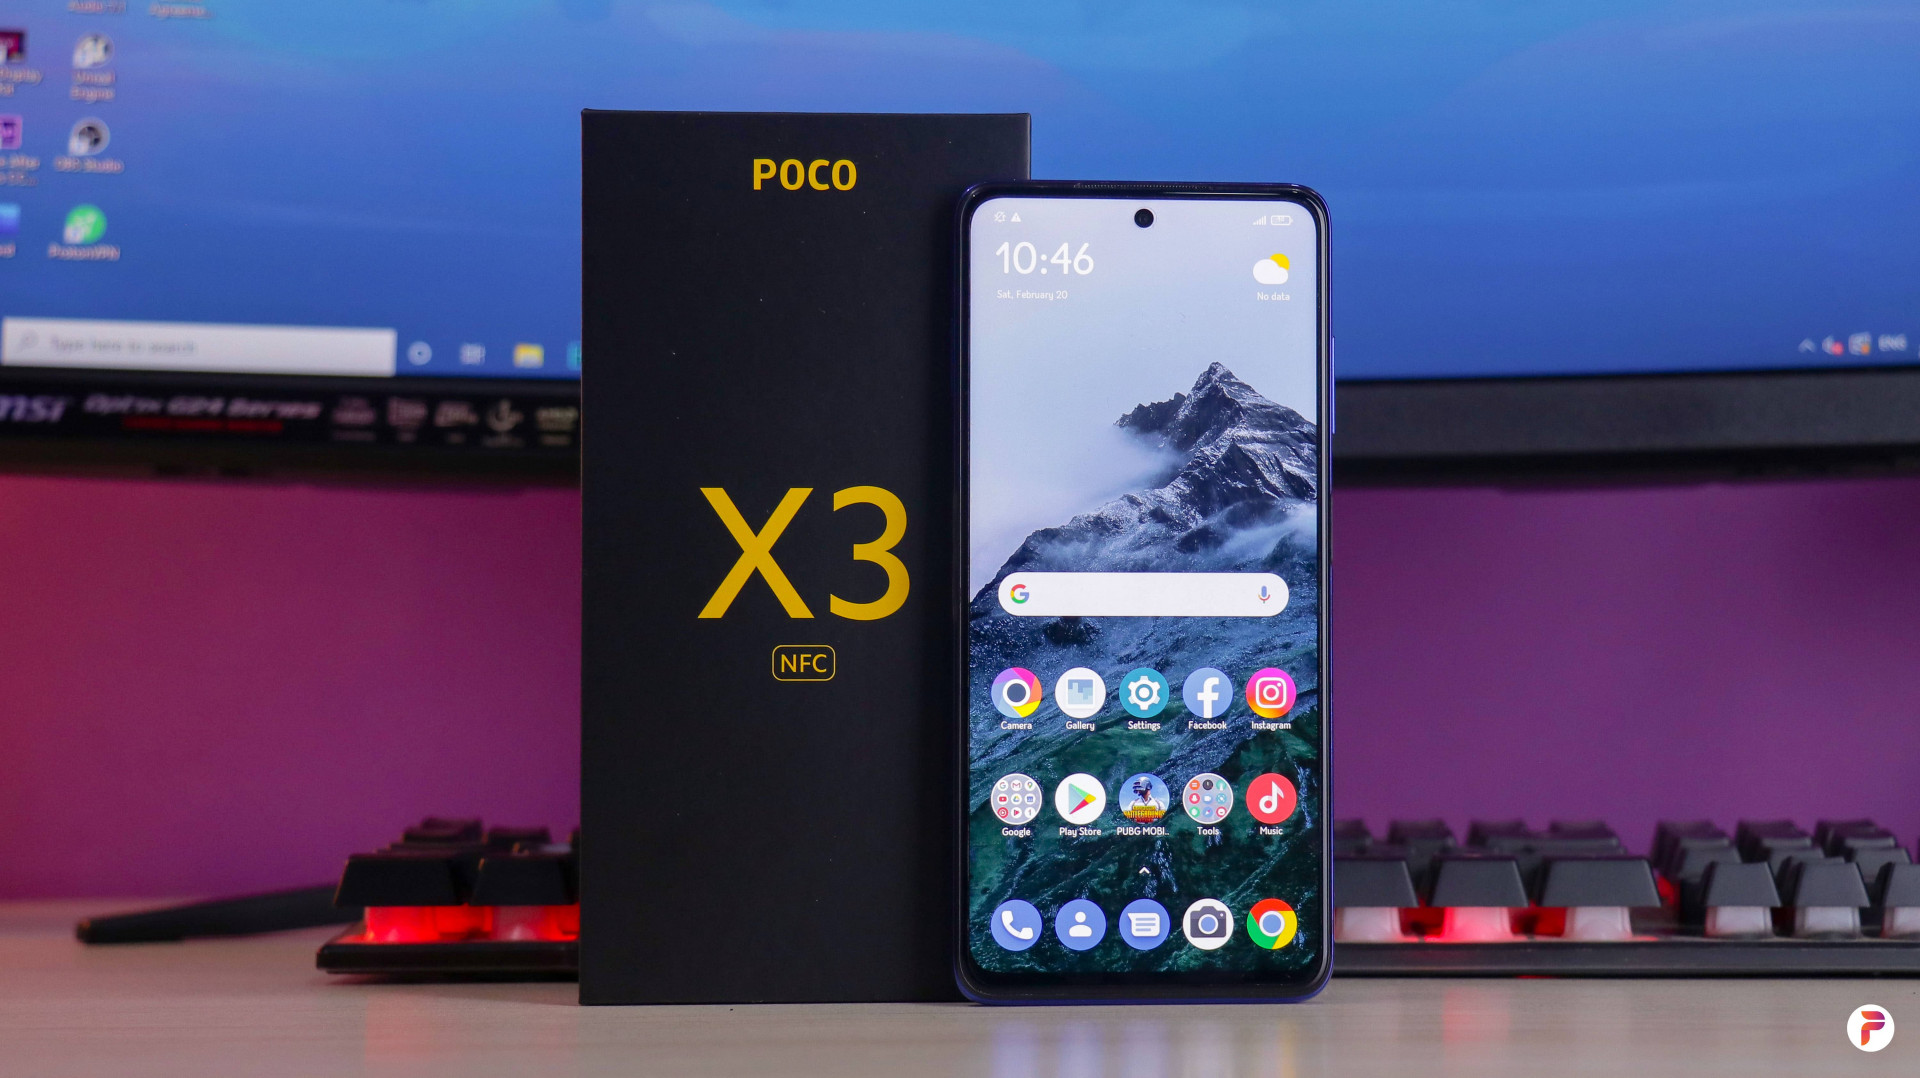 POCO X3 NFC Top Features